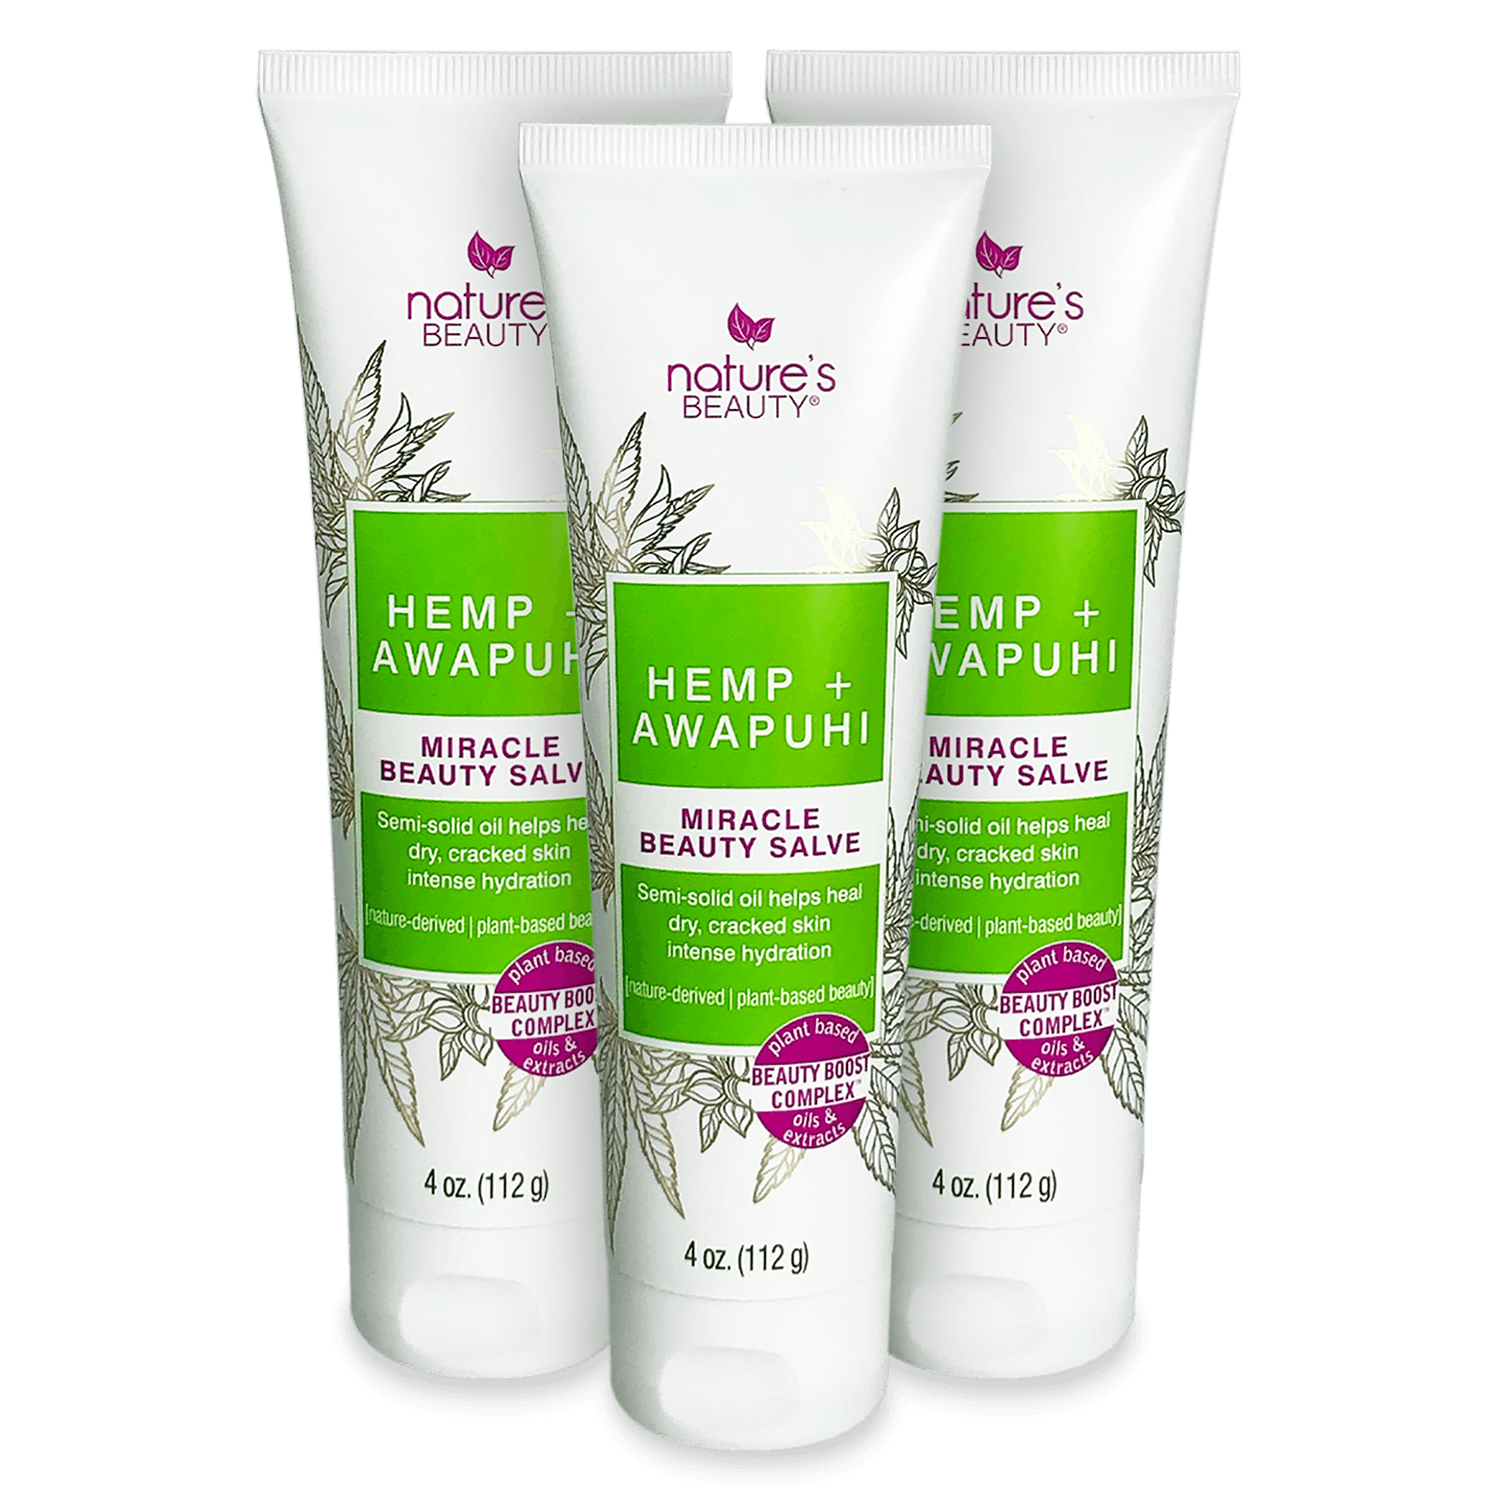 Hemp + Awapuhi Miracle Beauty Salve Nature's Beauty Body Care Buy 2 Get 1 Free 